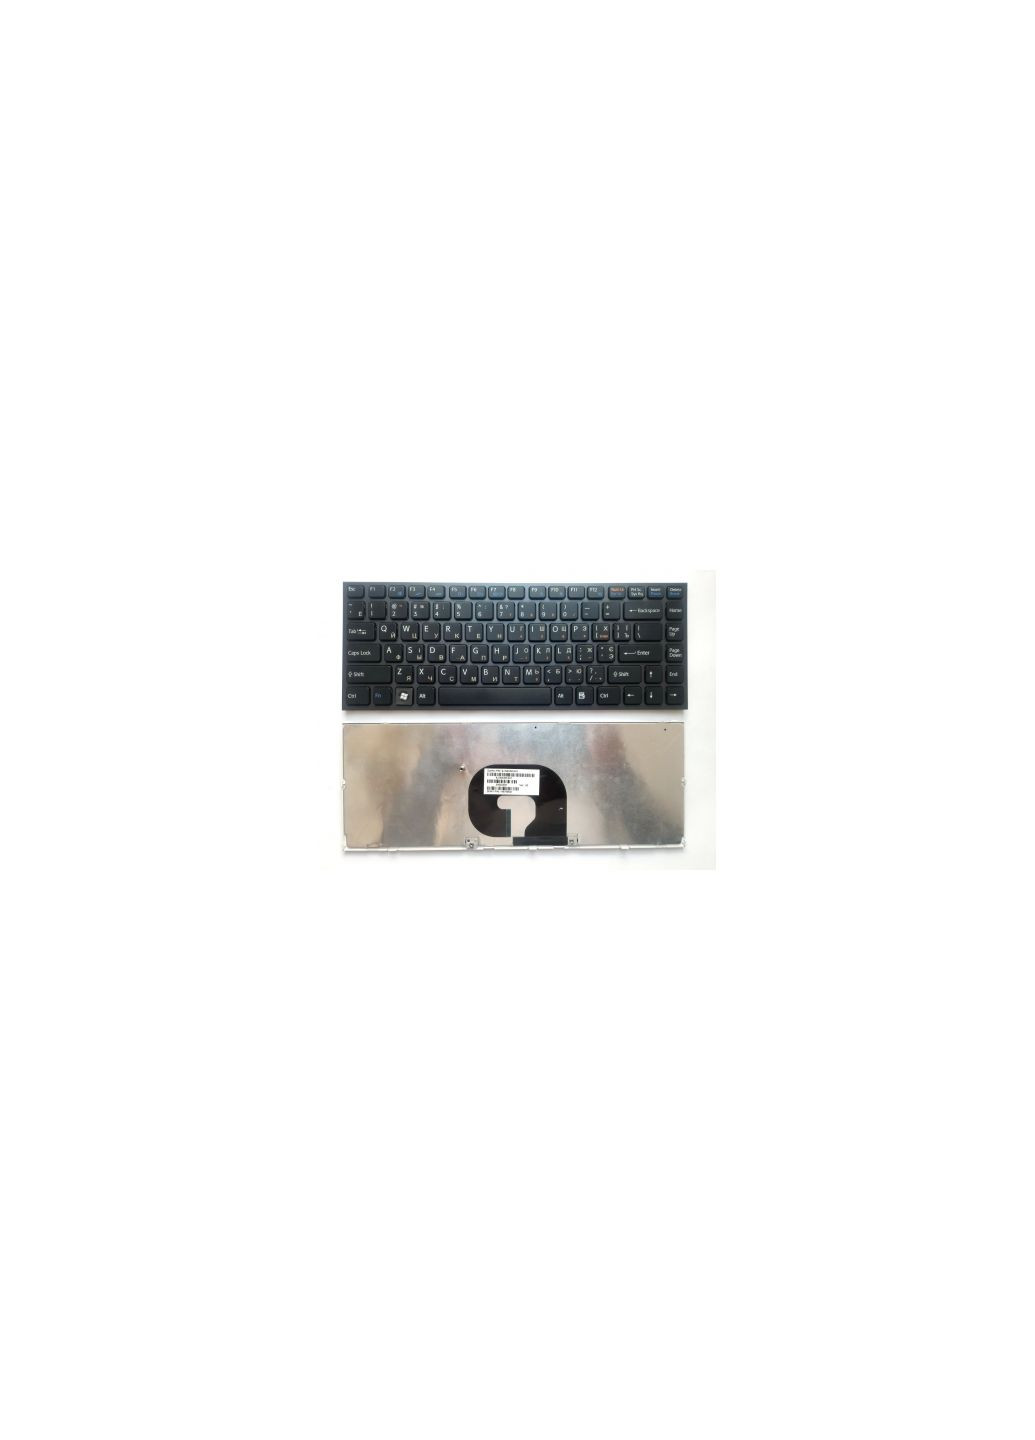 Клавиатура ноутбука VPCY черная с темно-серой рамкой UA (A43097) Sony vpc-y чeрная с темно-серой рамкой ua (276707384)